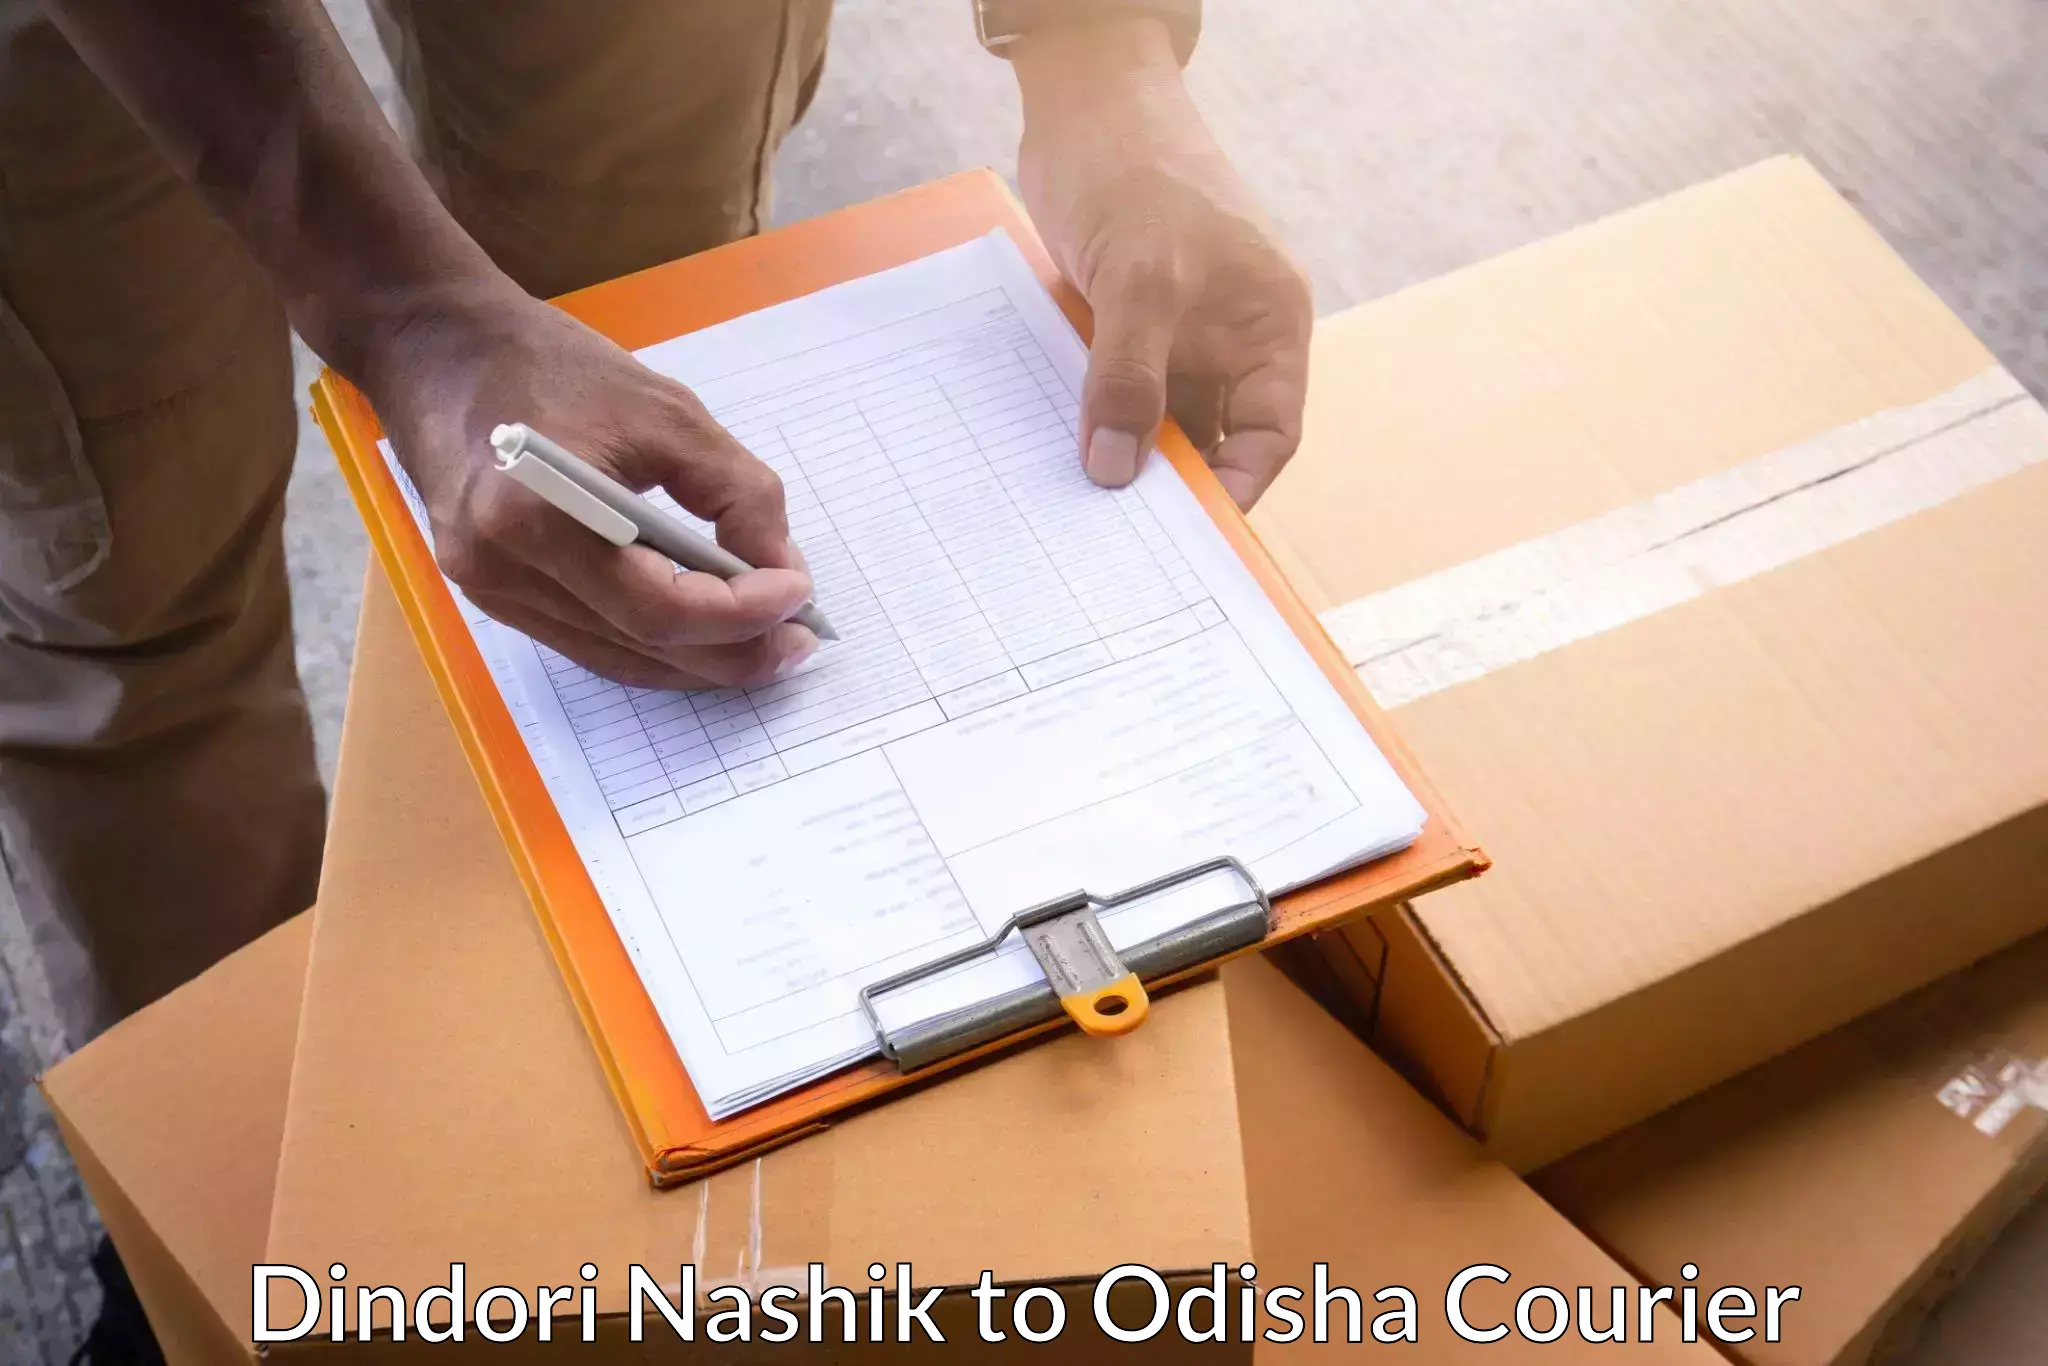 Reliable delivery network Dindori Nashik to Odisha